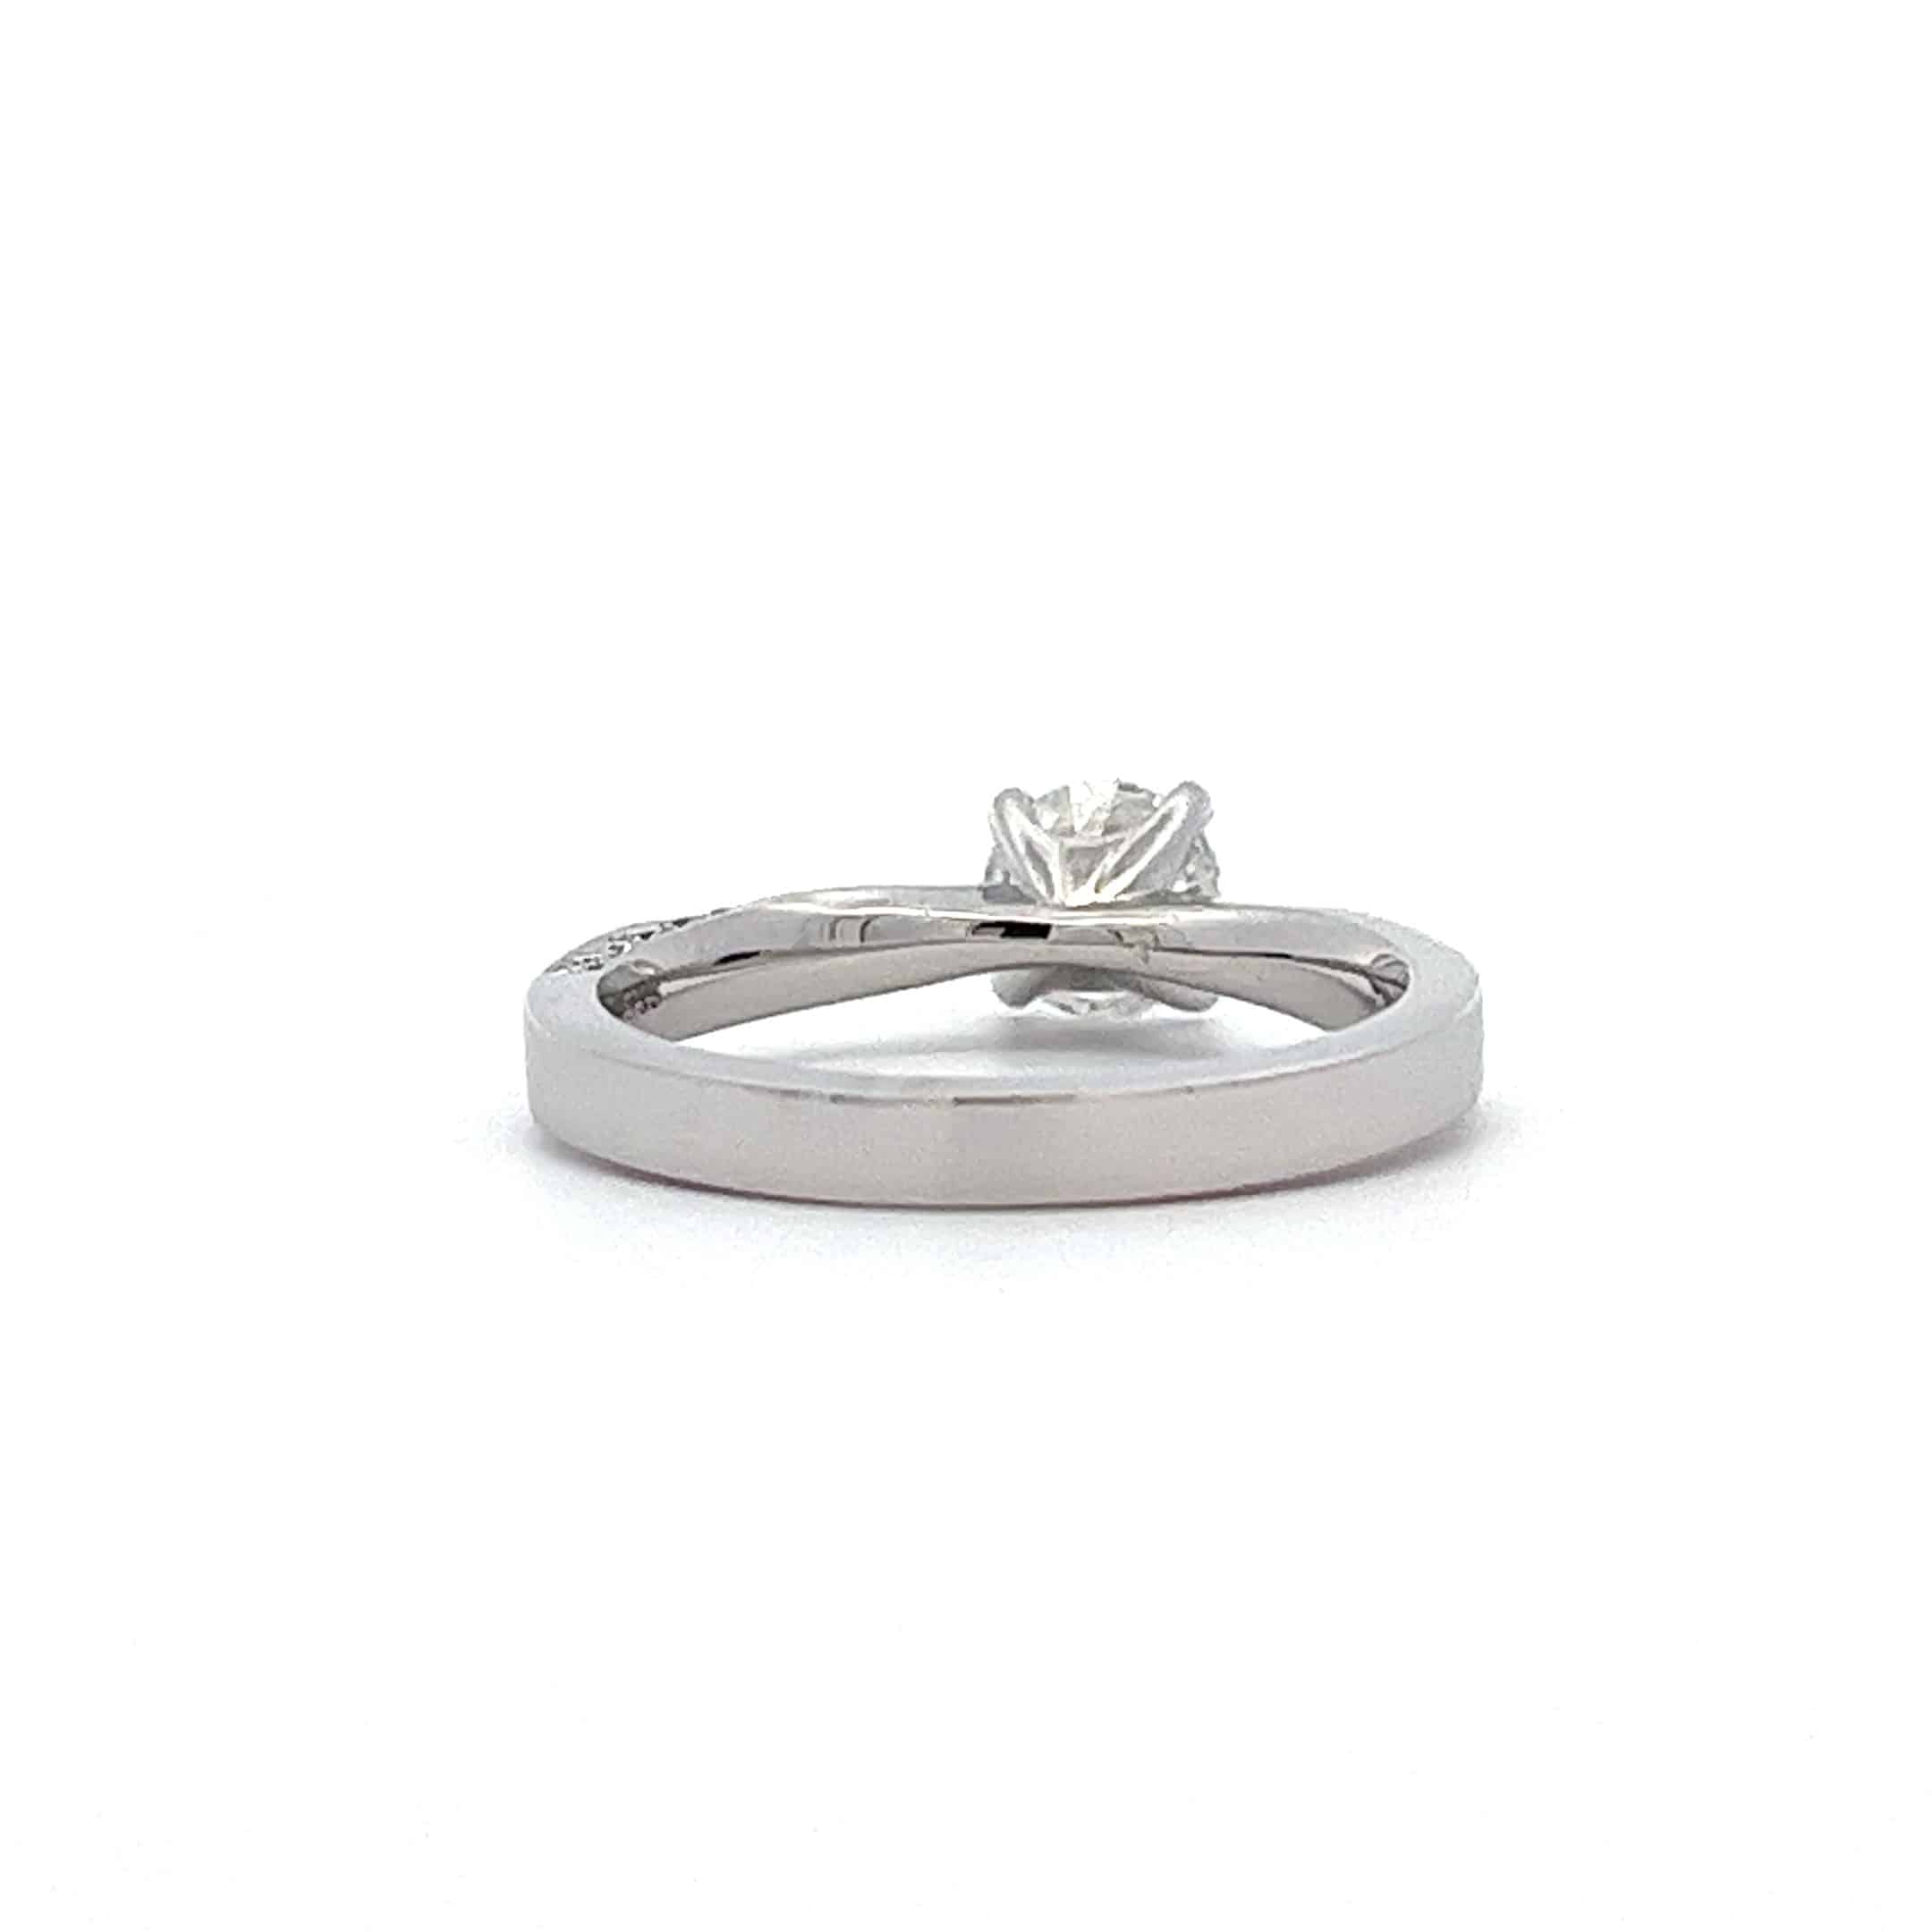 0.60ct Brilliant Cut Diamond Solitaire Ring set in 18ct White Gold